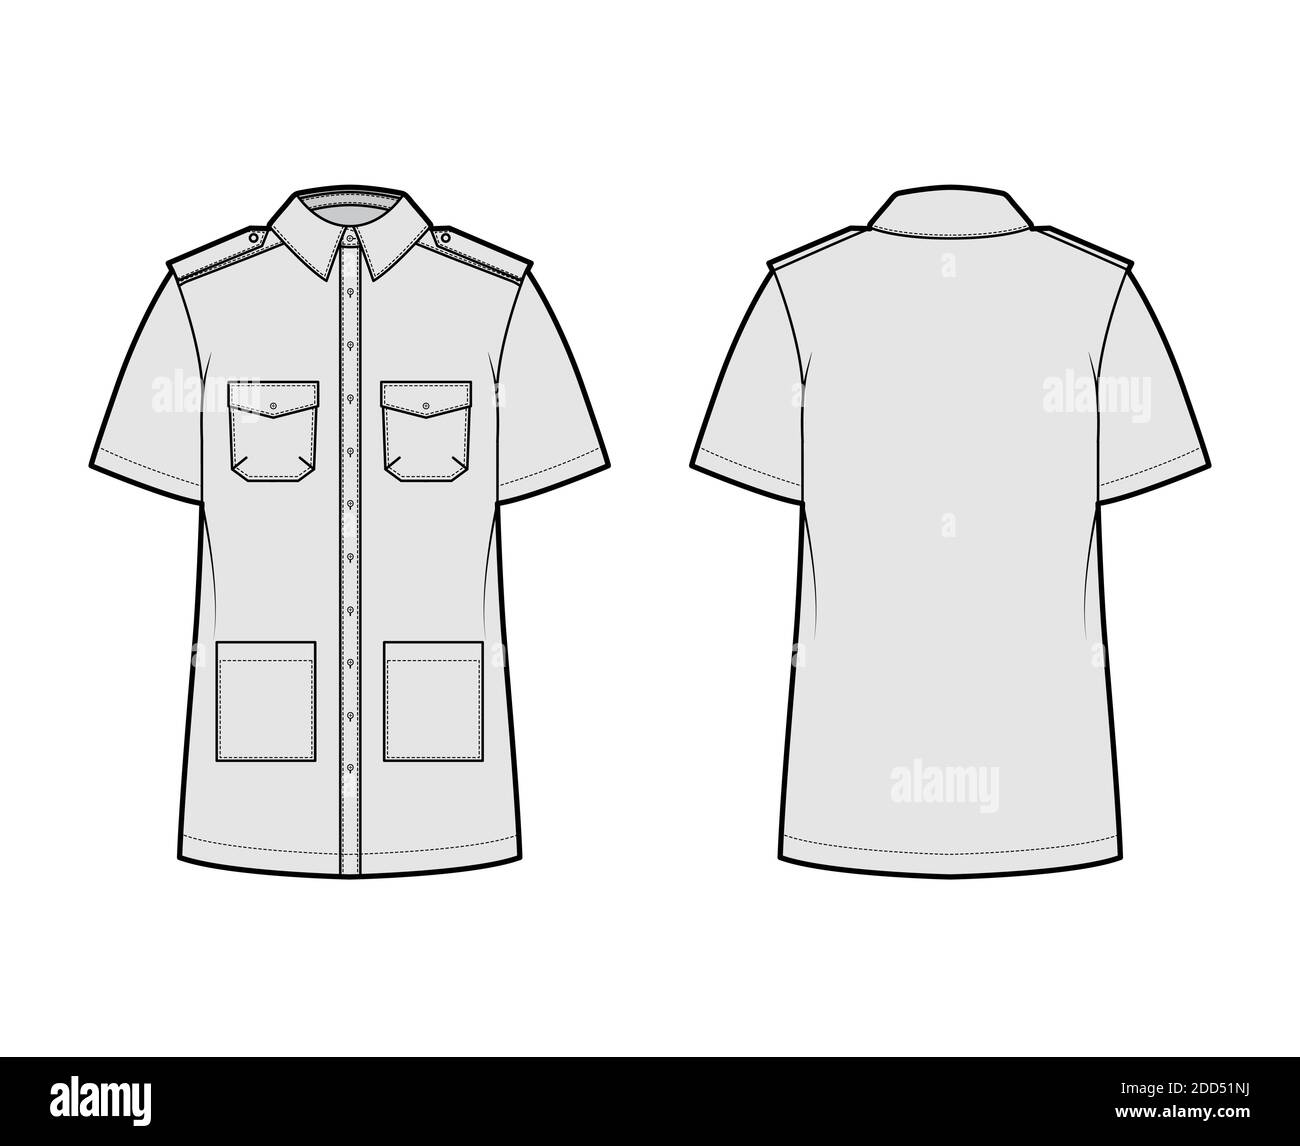 Shirt safari technical fashion illustration with short sleeves, flaps ...